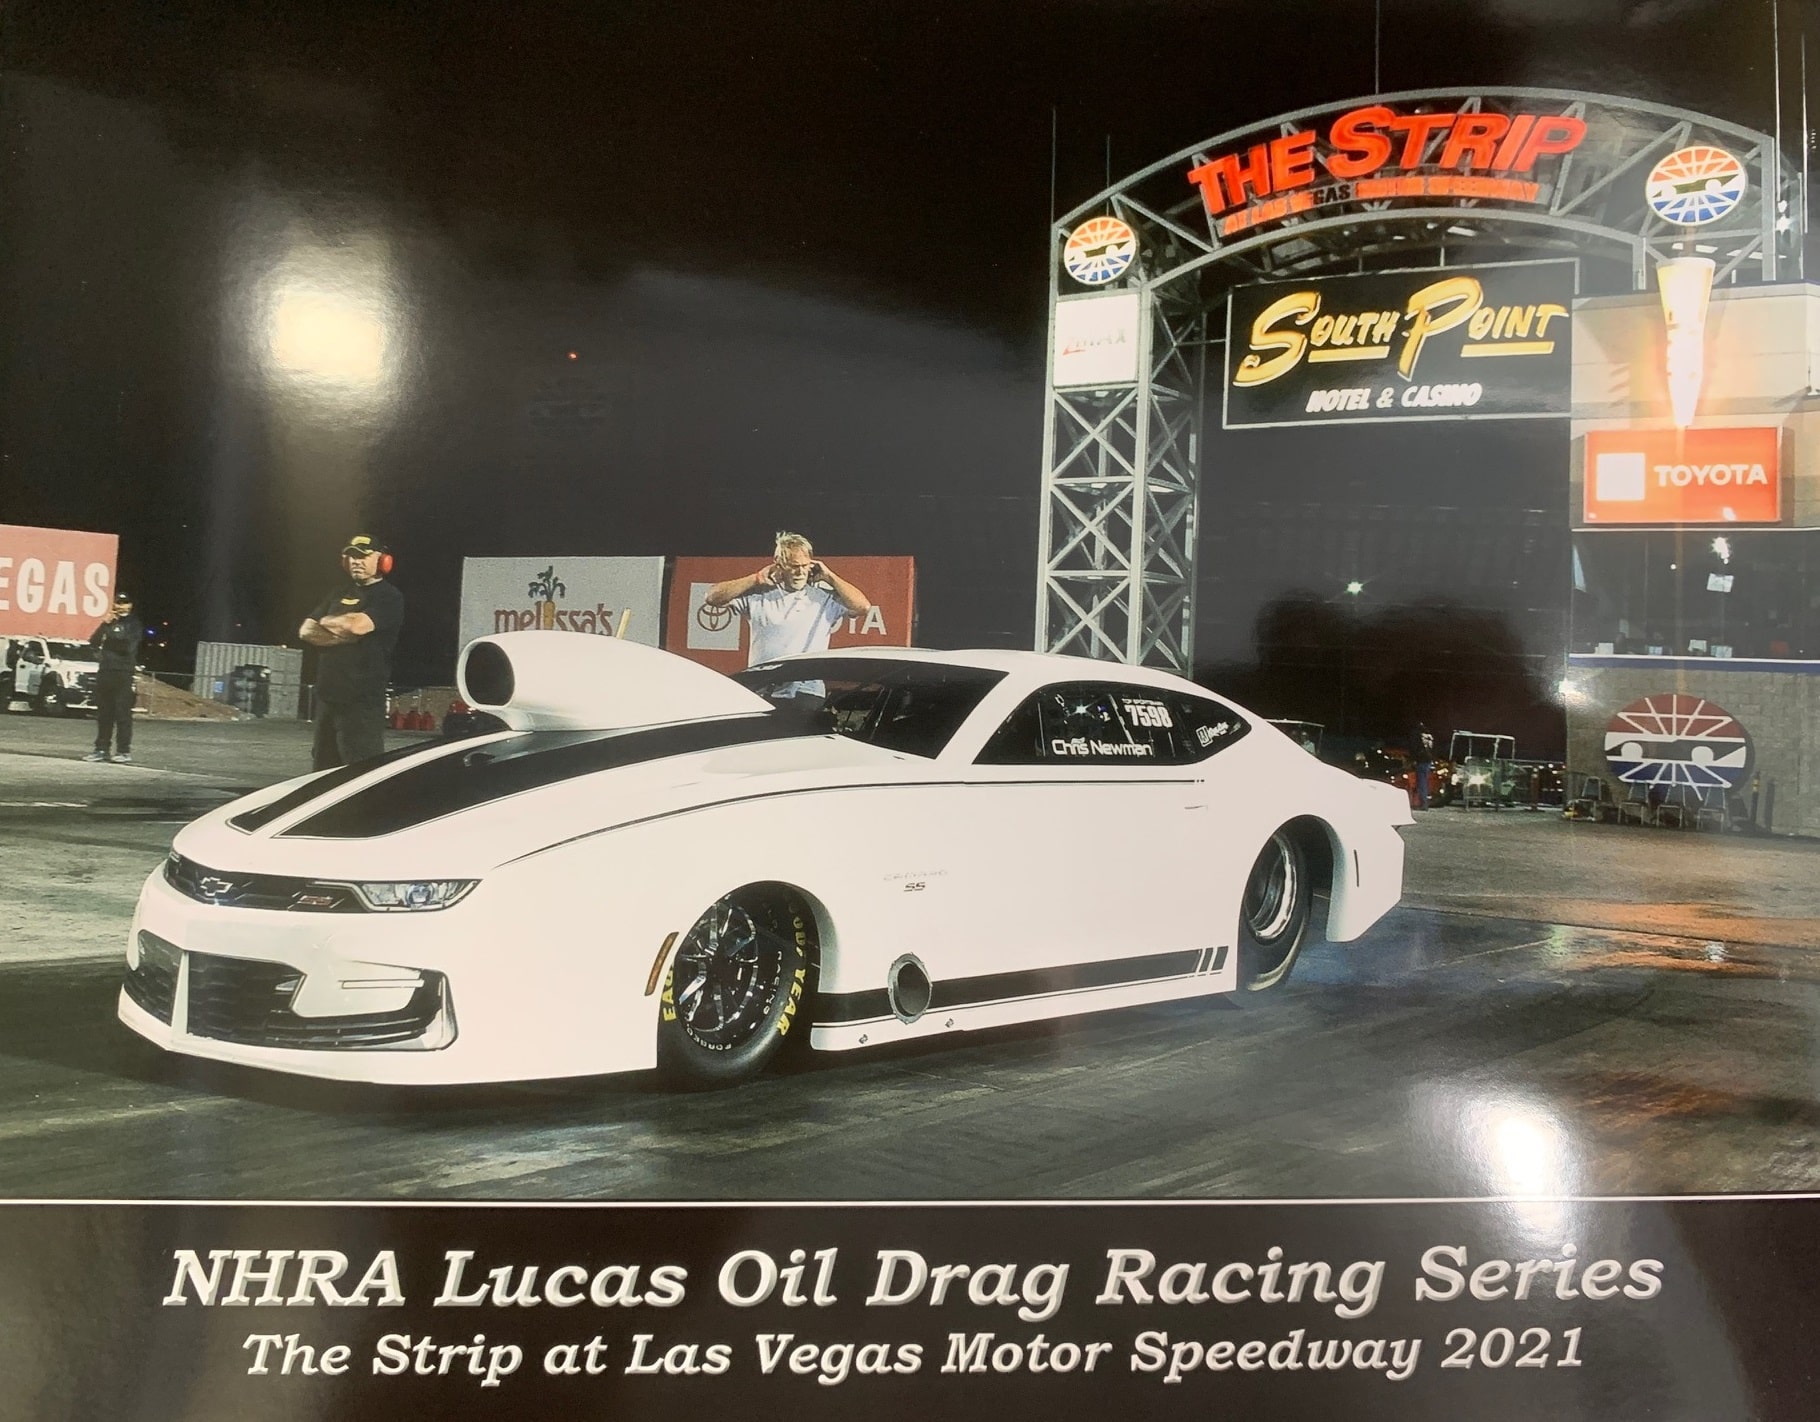 racing series newsletter image